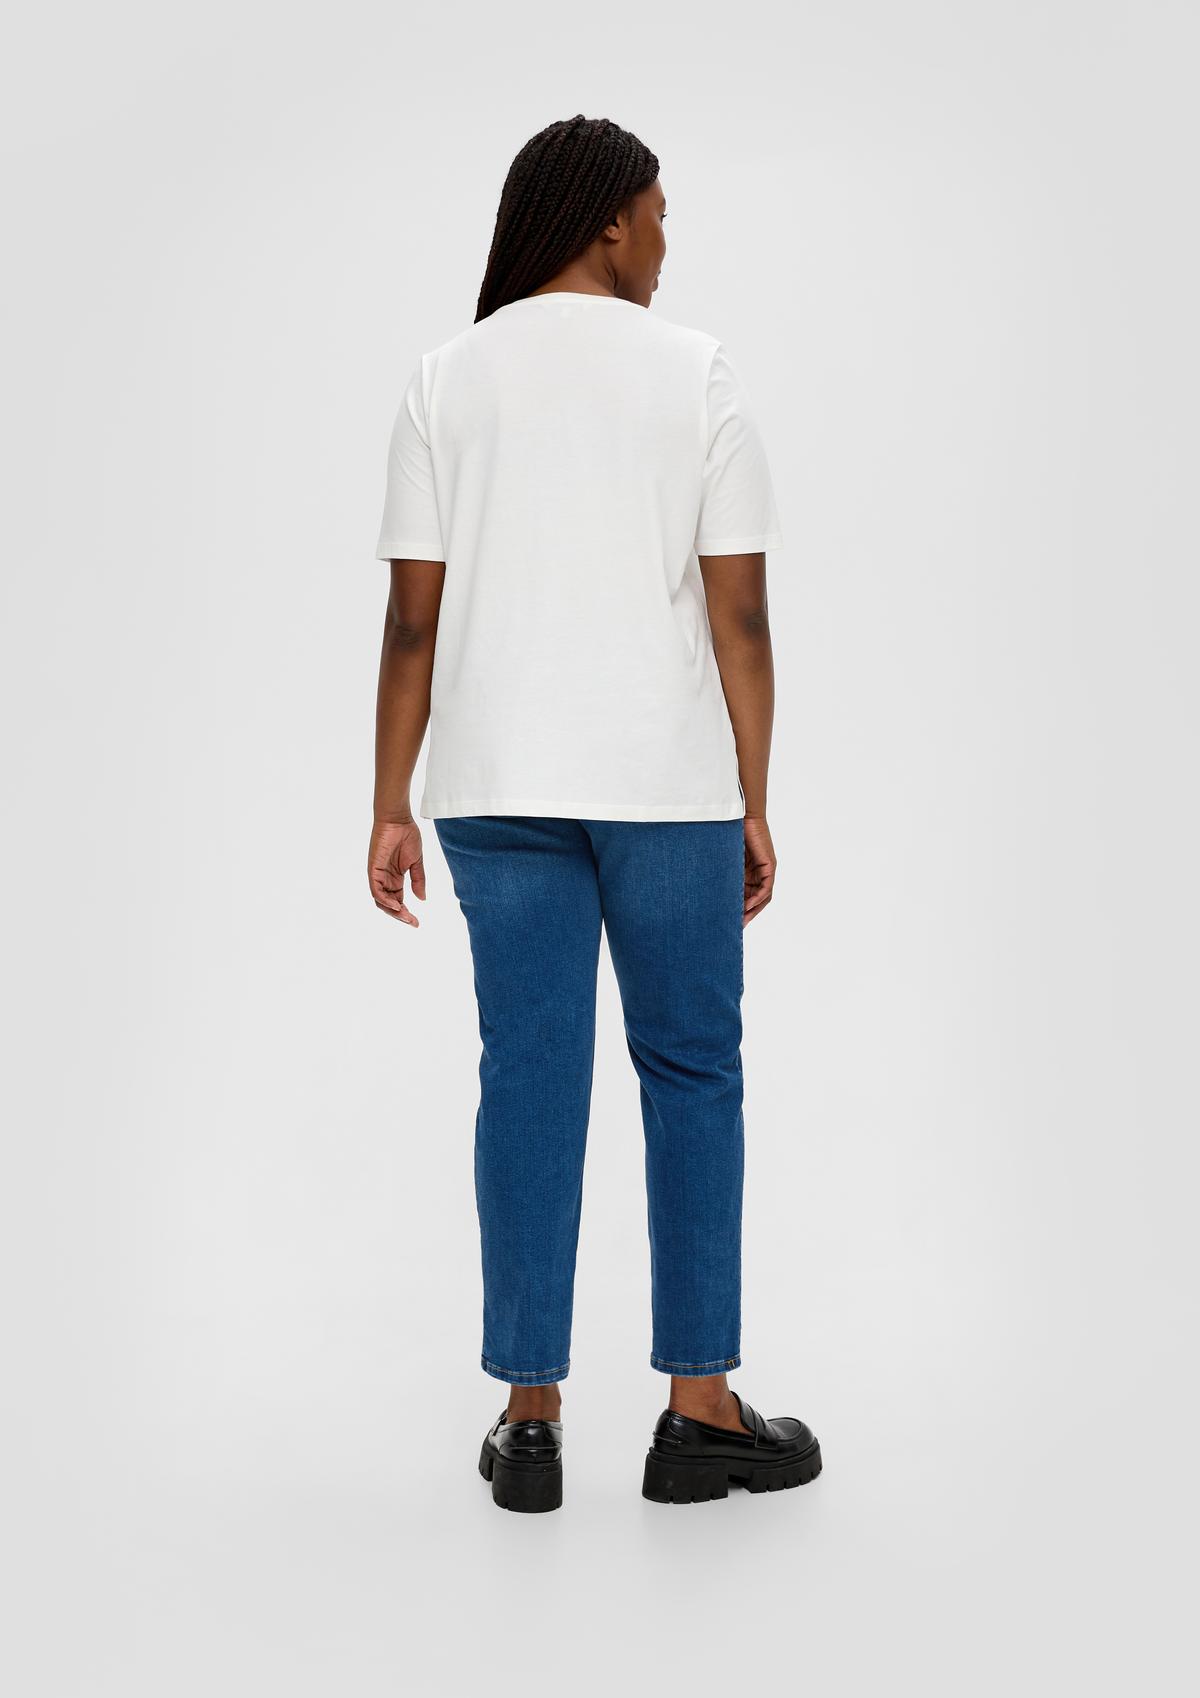 s.Oliver Curvy jeans / regular fit / mid rise / slim leg